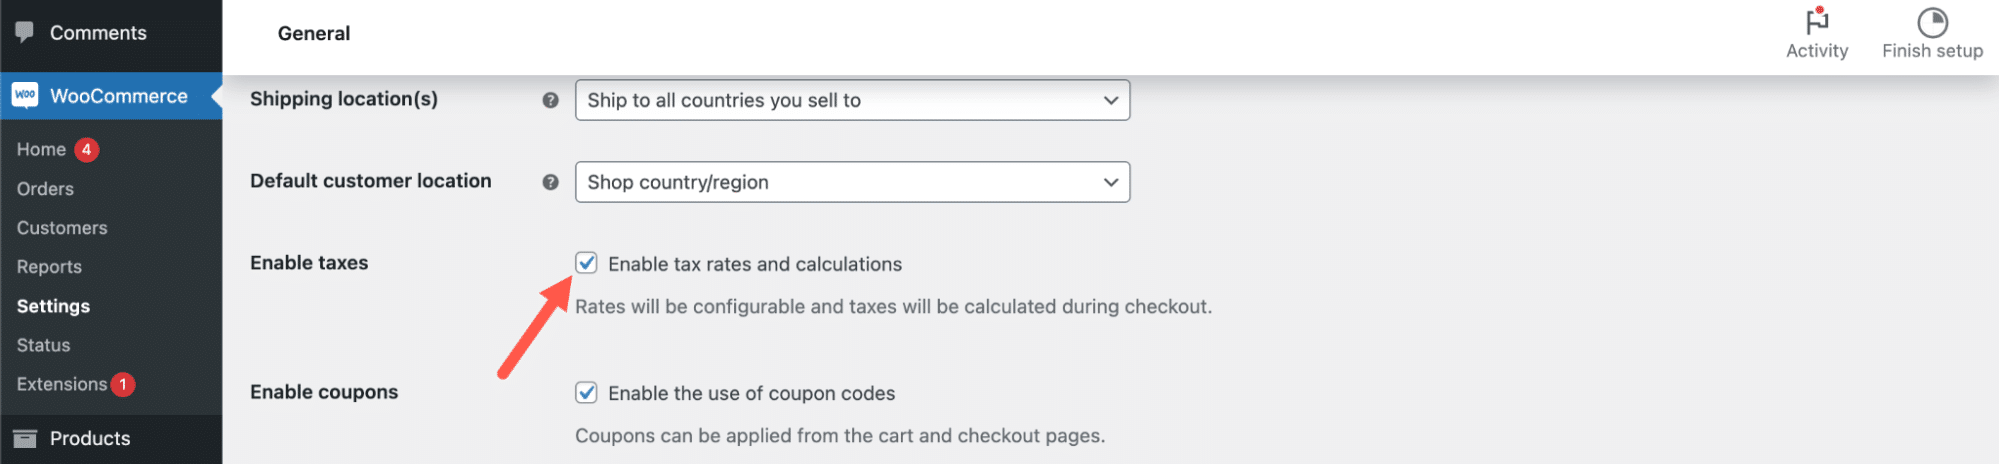 Ative as taxas e cálculos de impostos no WooCommerce.